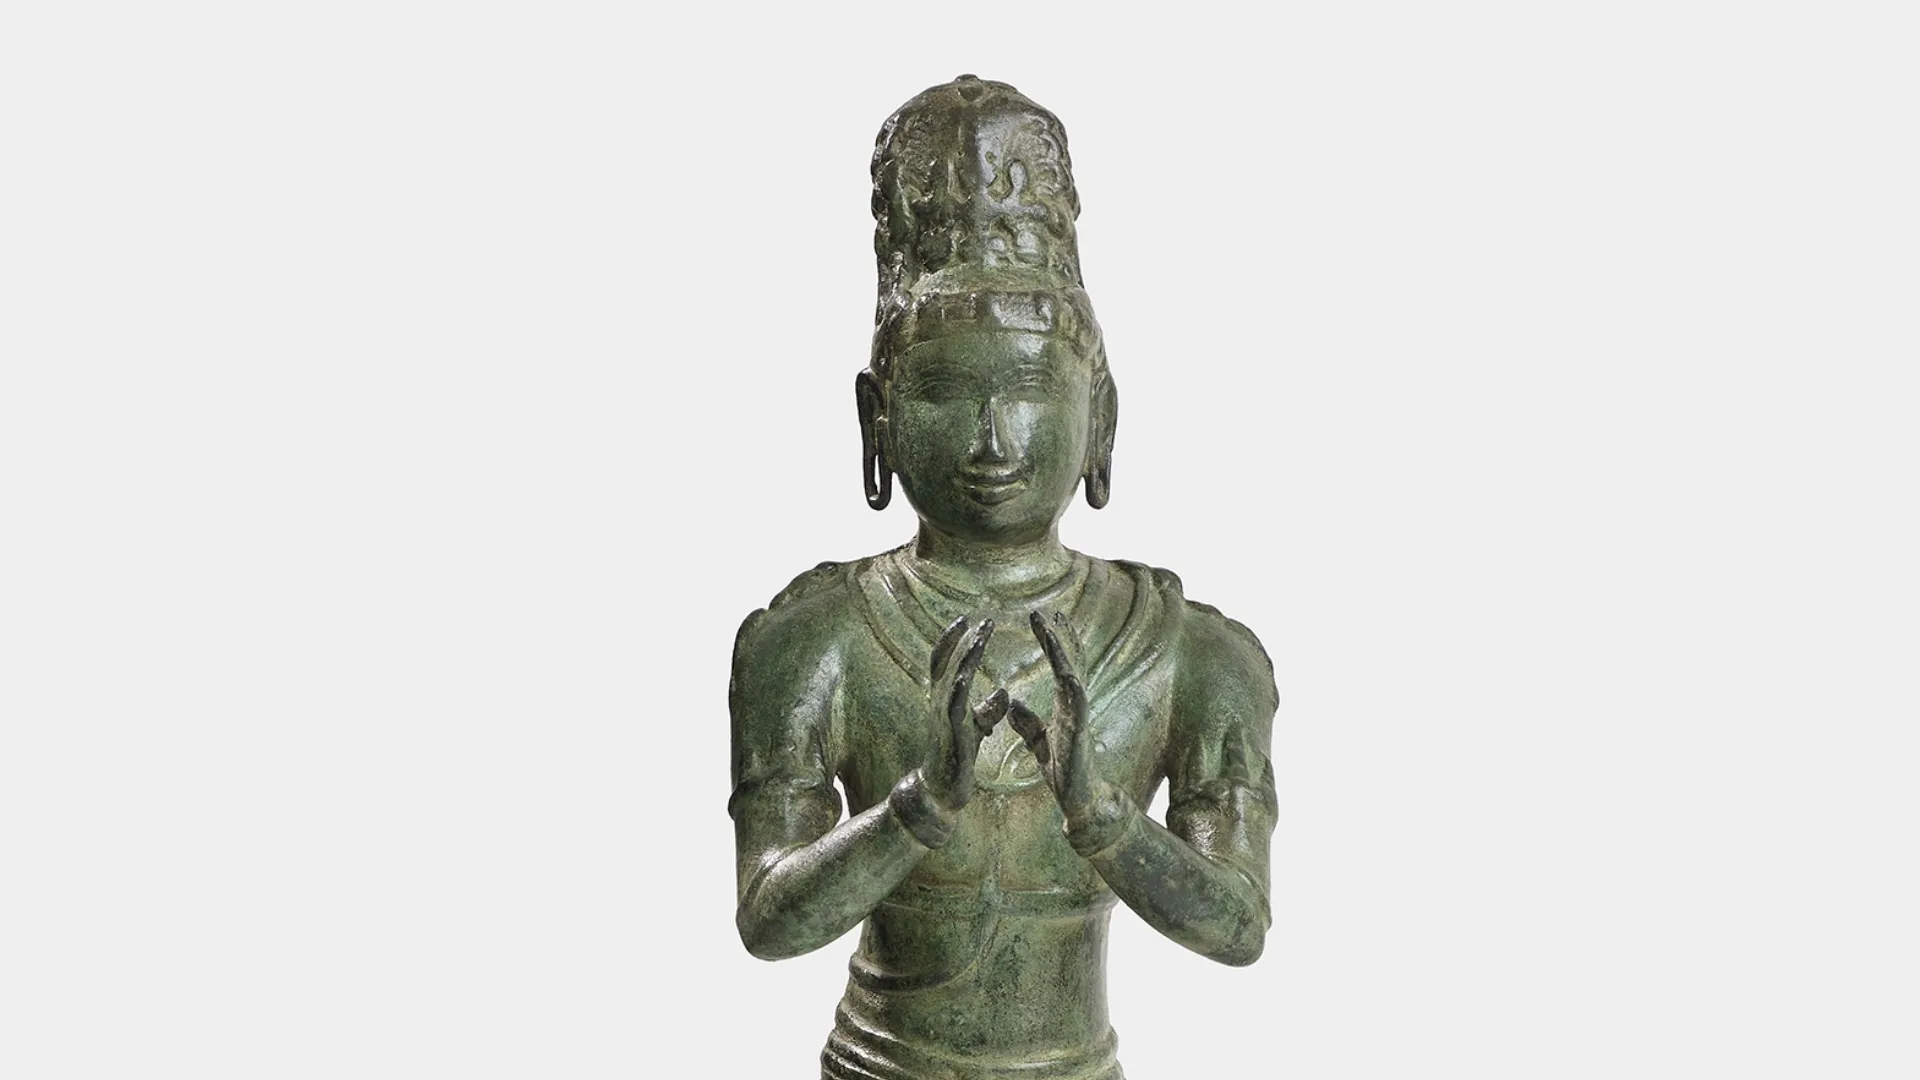 A copper alloy figure of Chandesha